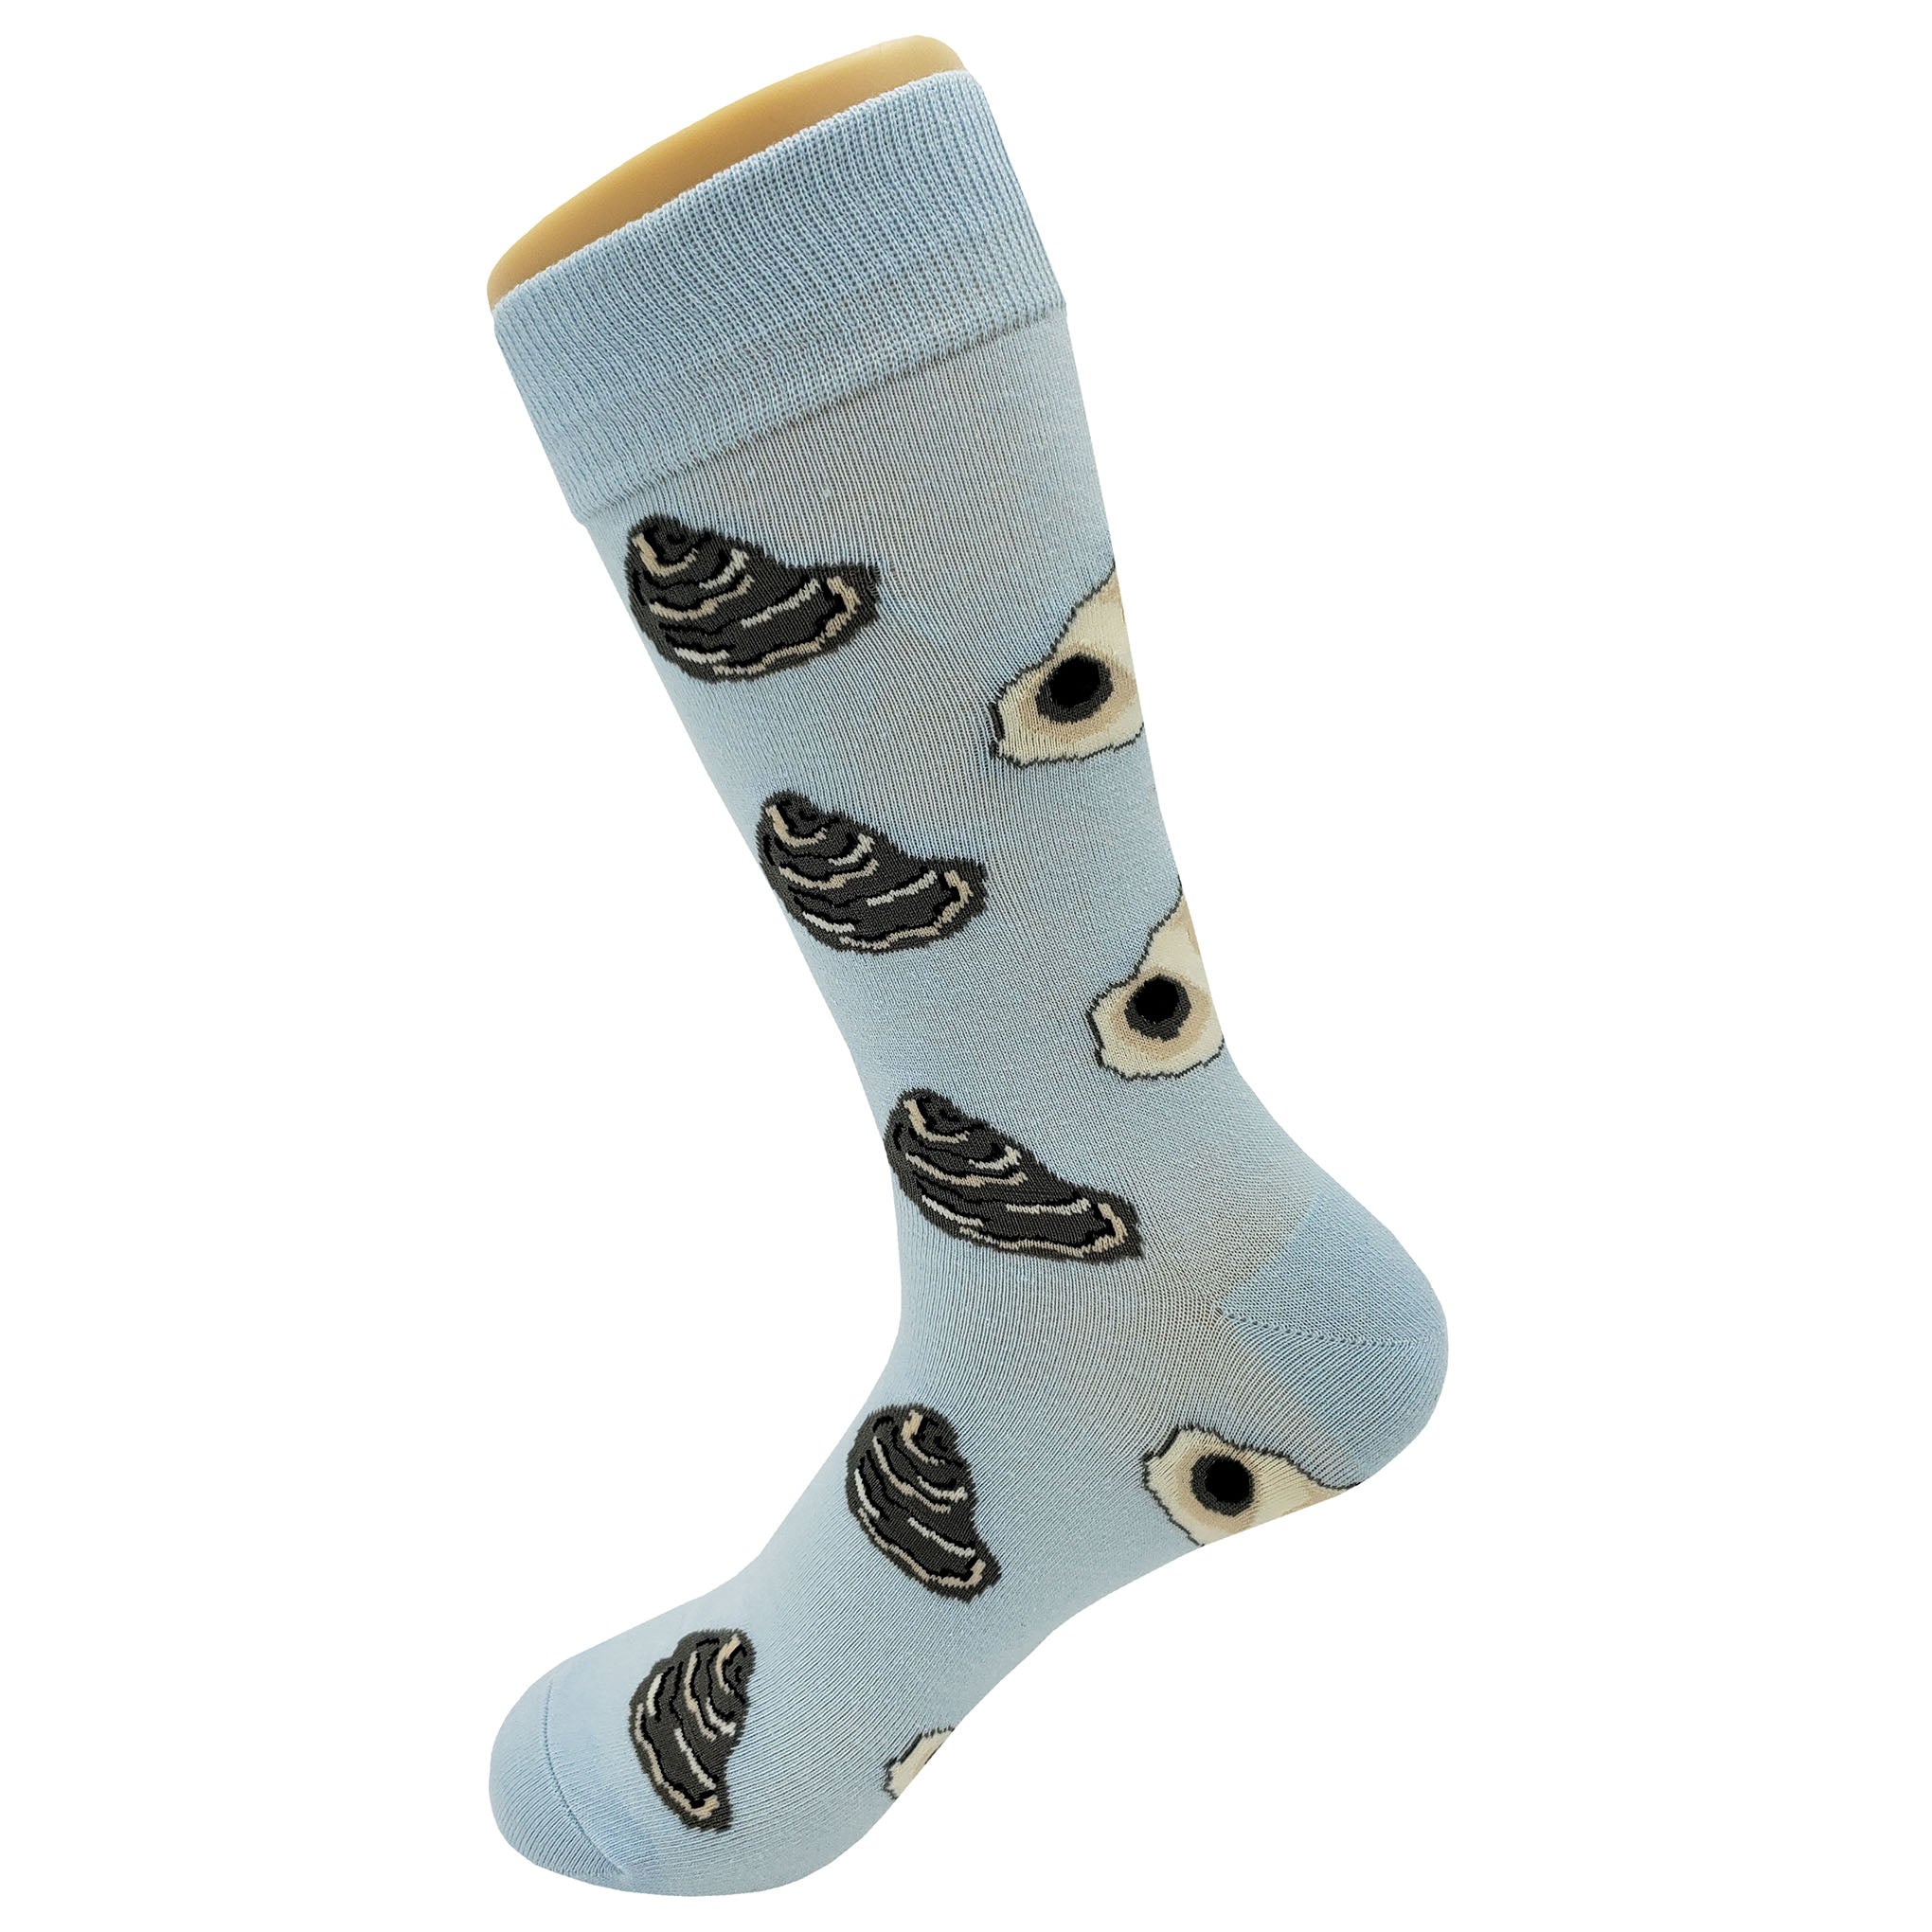 Oyster Socks - Fun and Crazy Socks at Sockfly.com